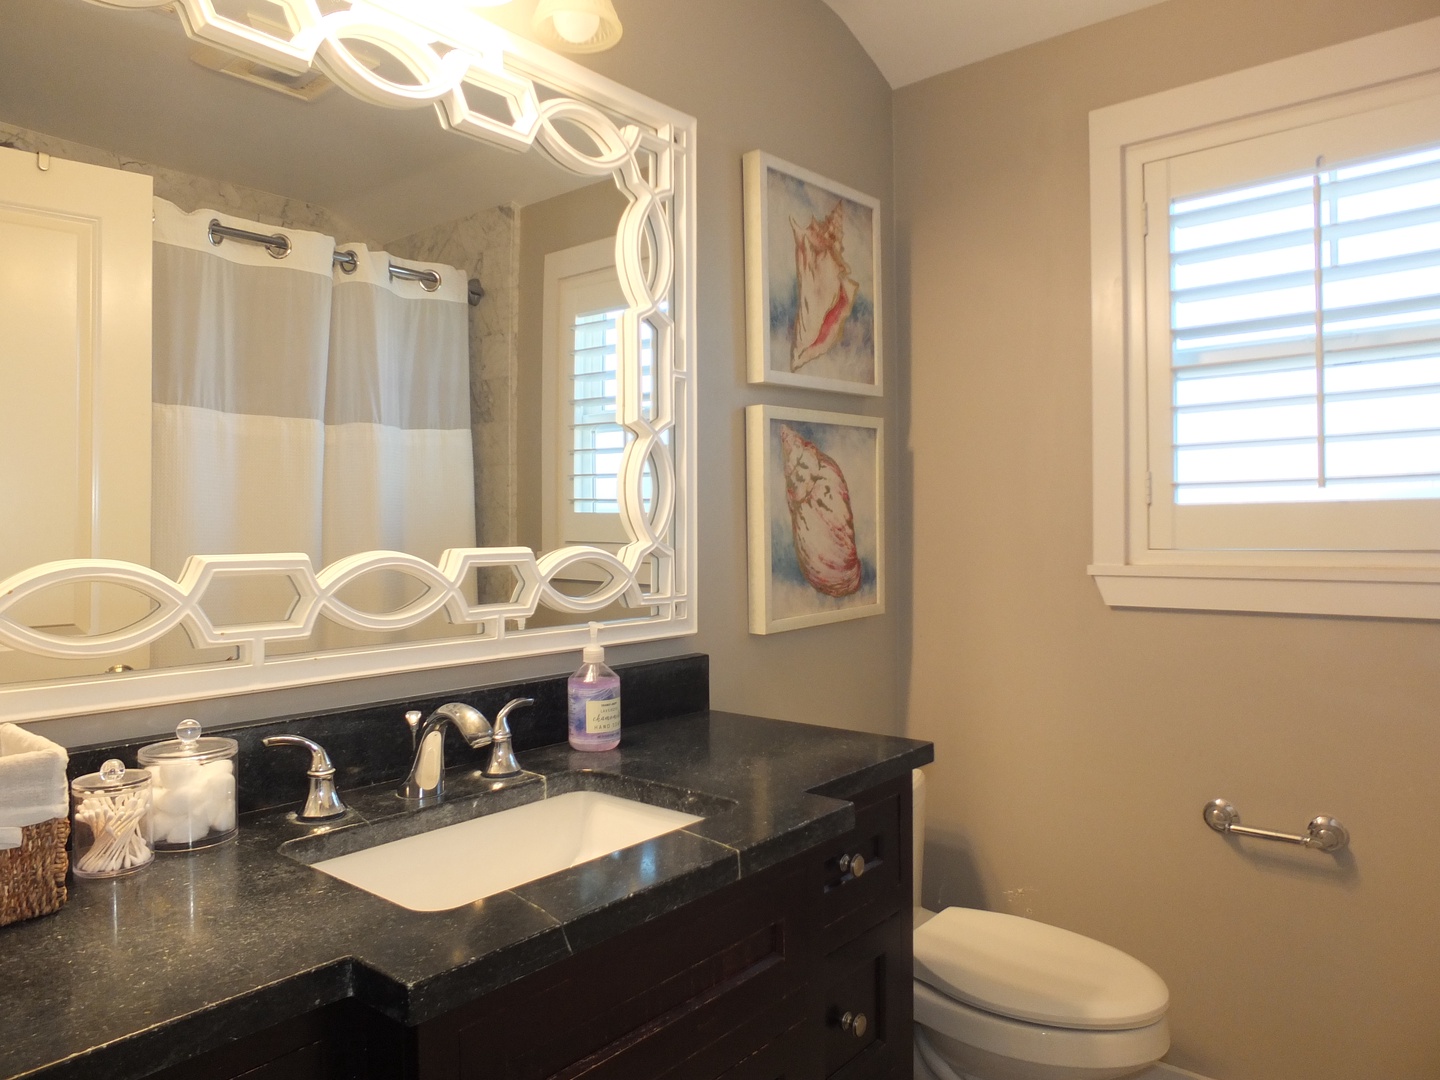 This full bathroom provides a single vanity & shower/tub combo